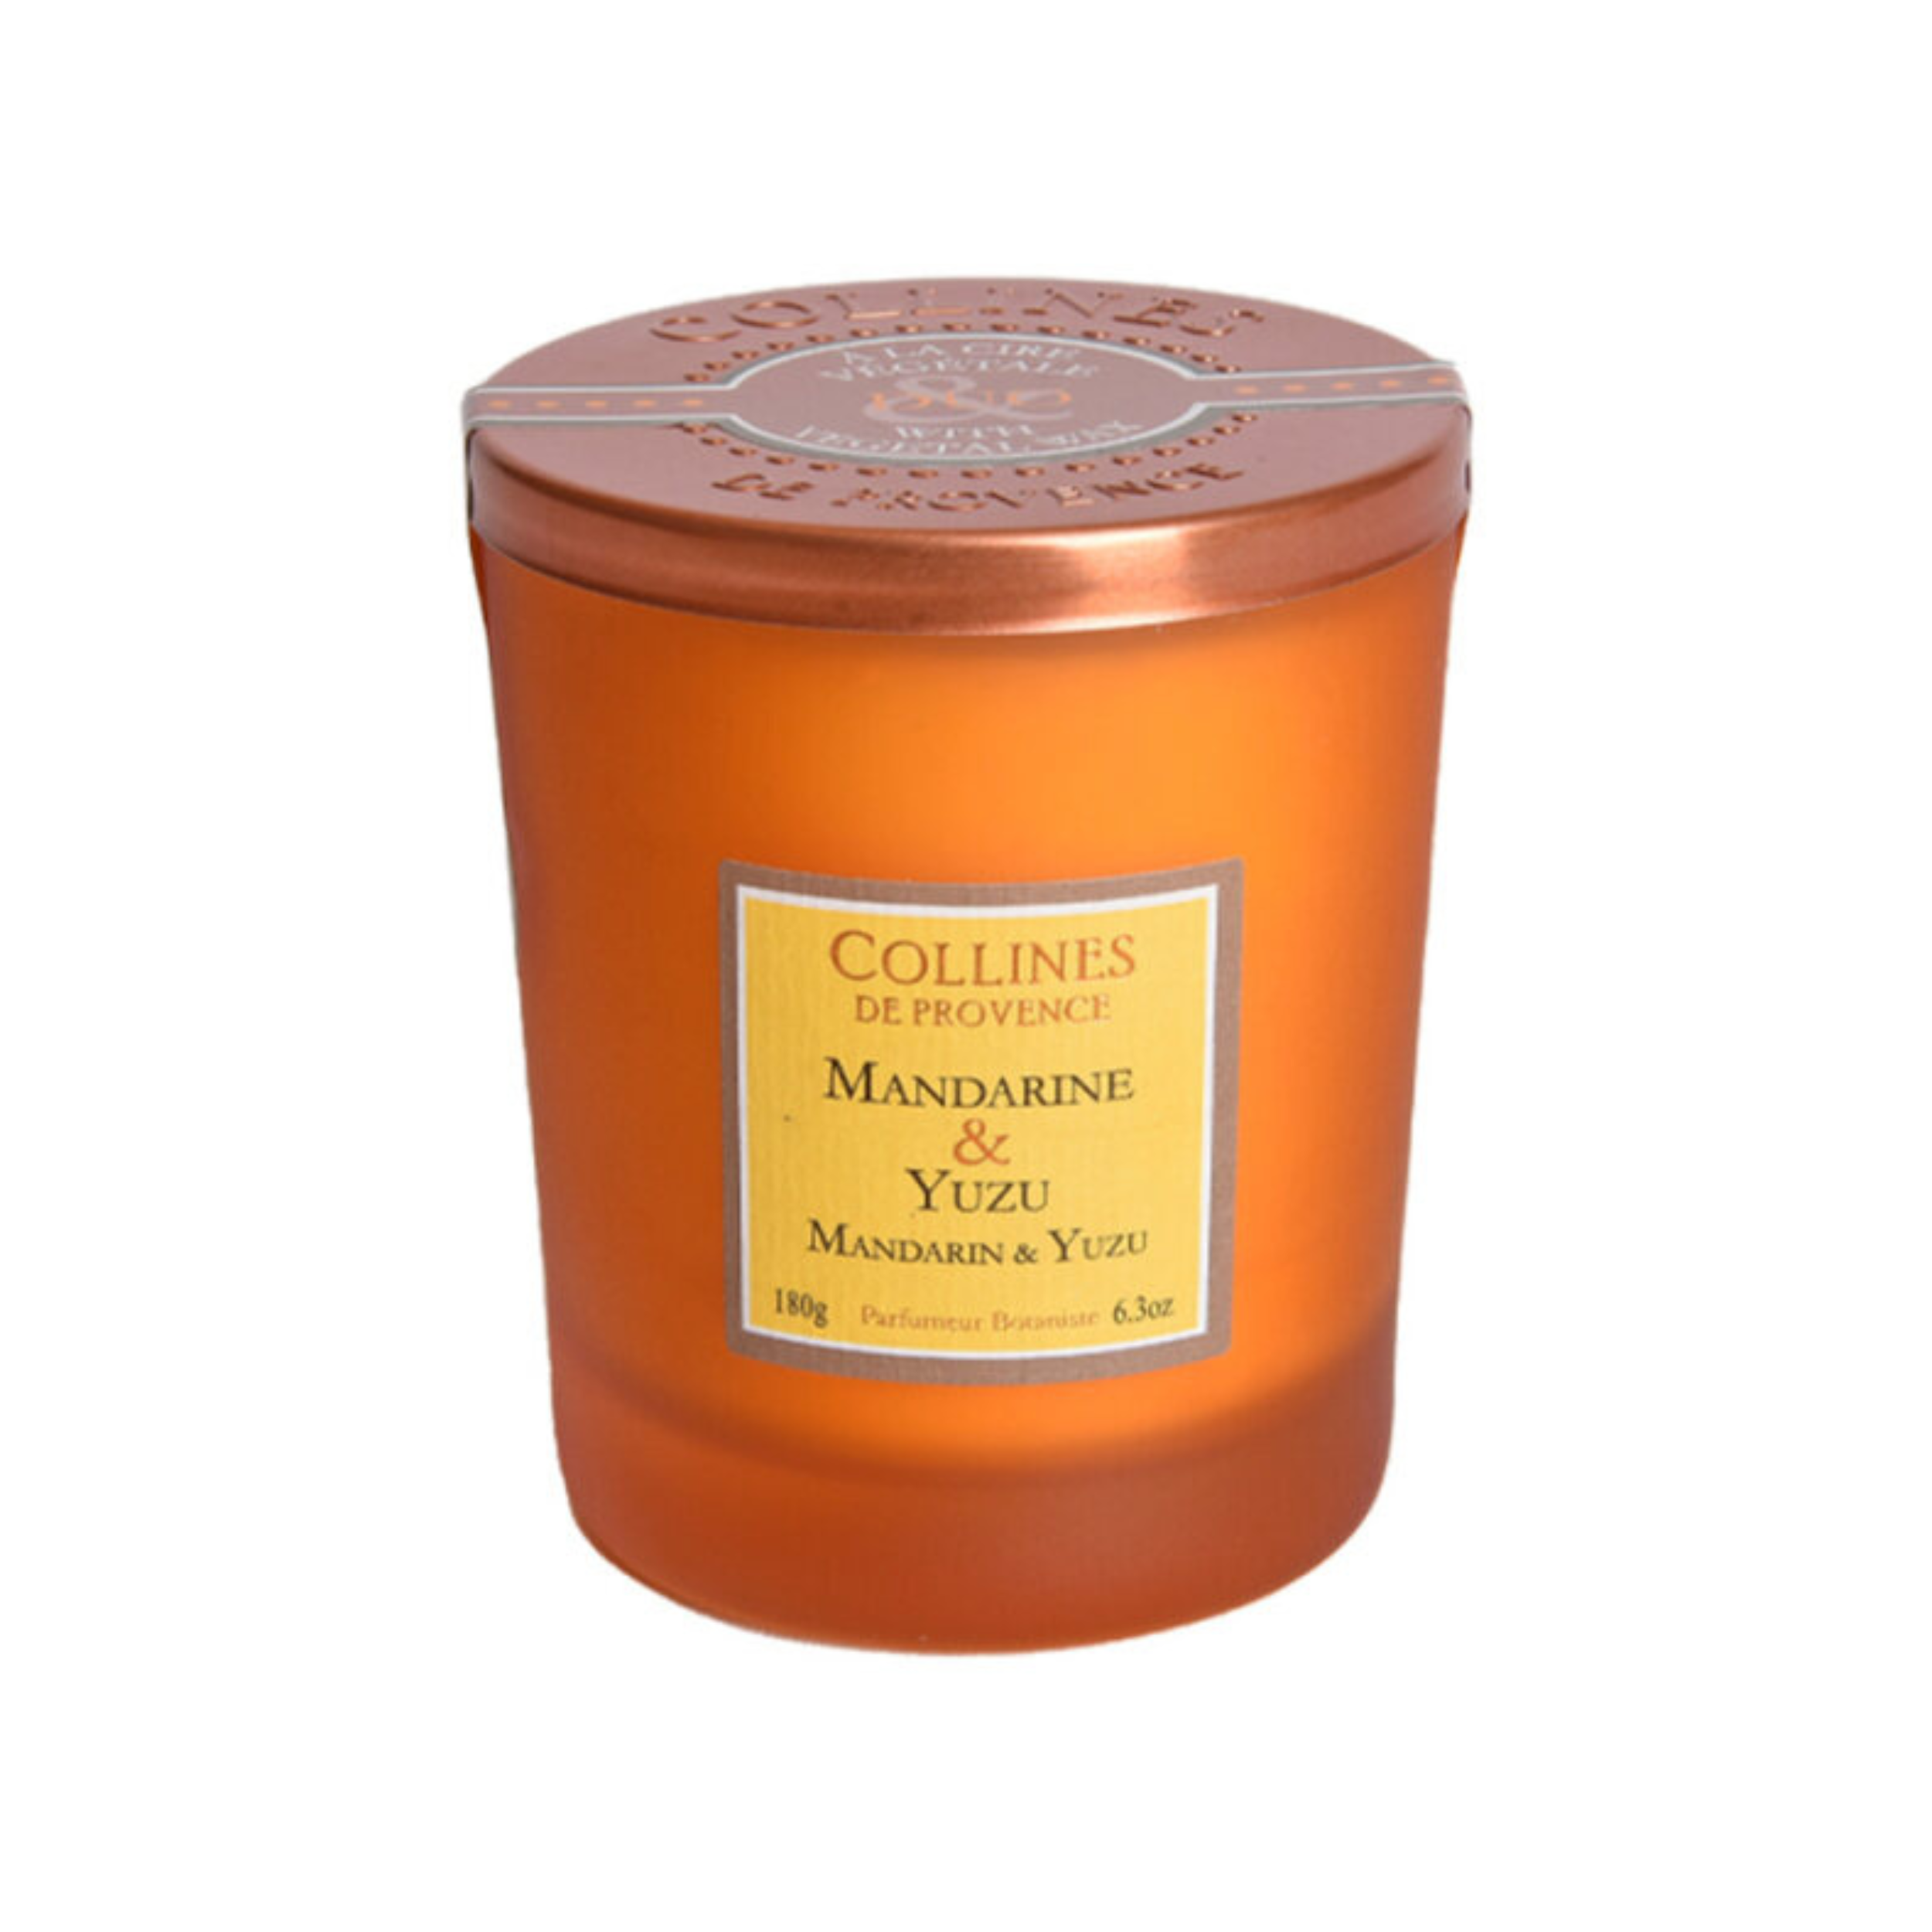 Collines de Provence Duftkerze "Mandarine & Yuzu" 180g